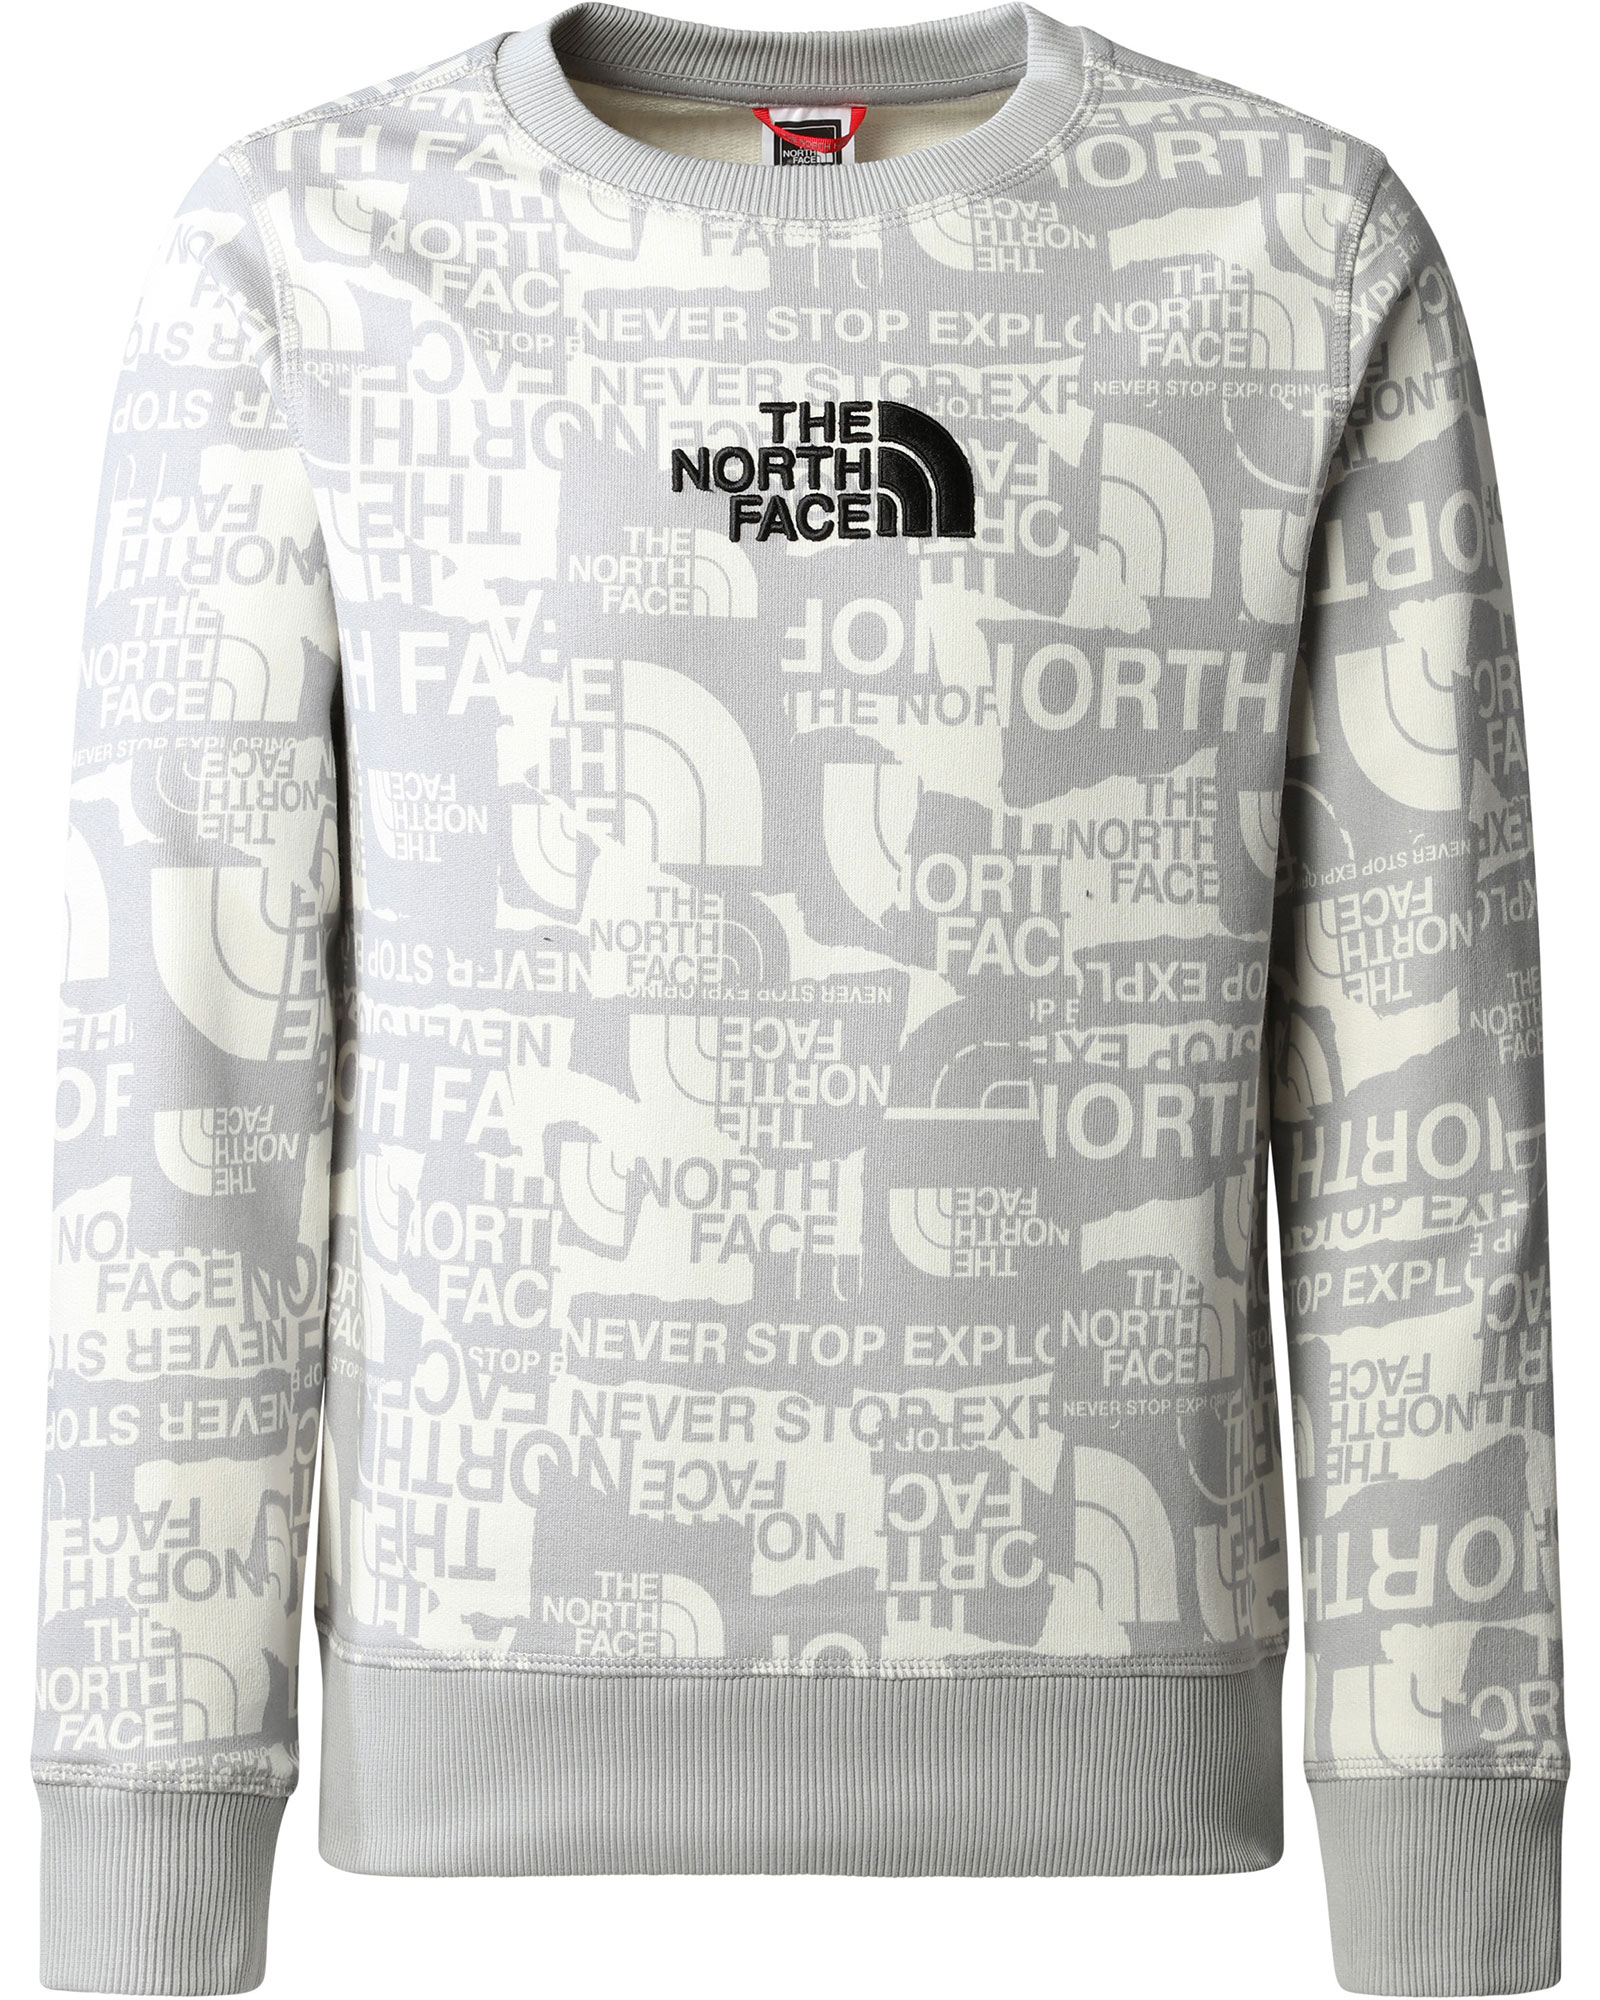 The North Face Boy’s Drew Peak Light Crew T Shirt - Meld Grey M